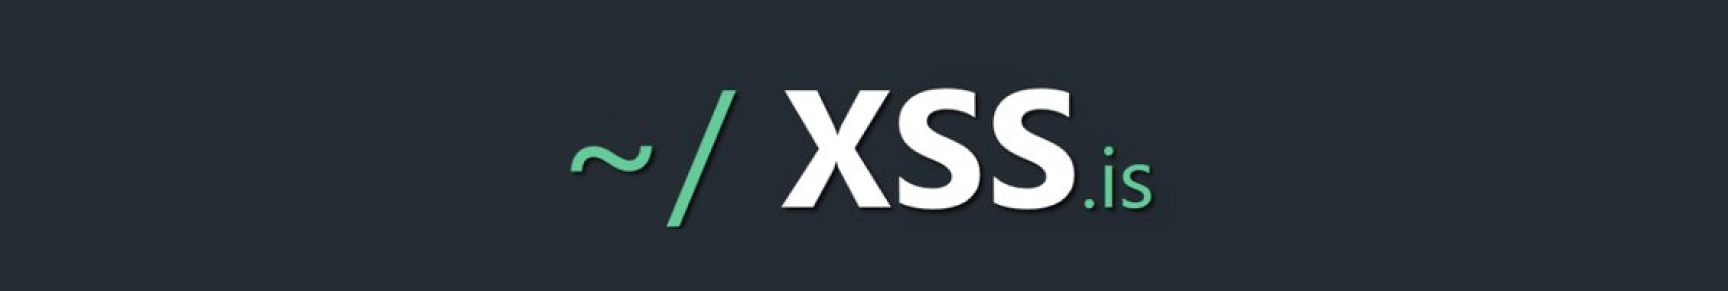 XSS hacker forum logo